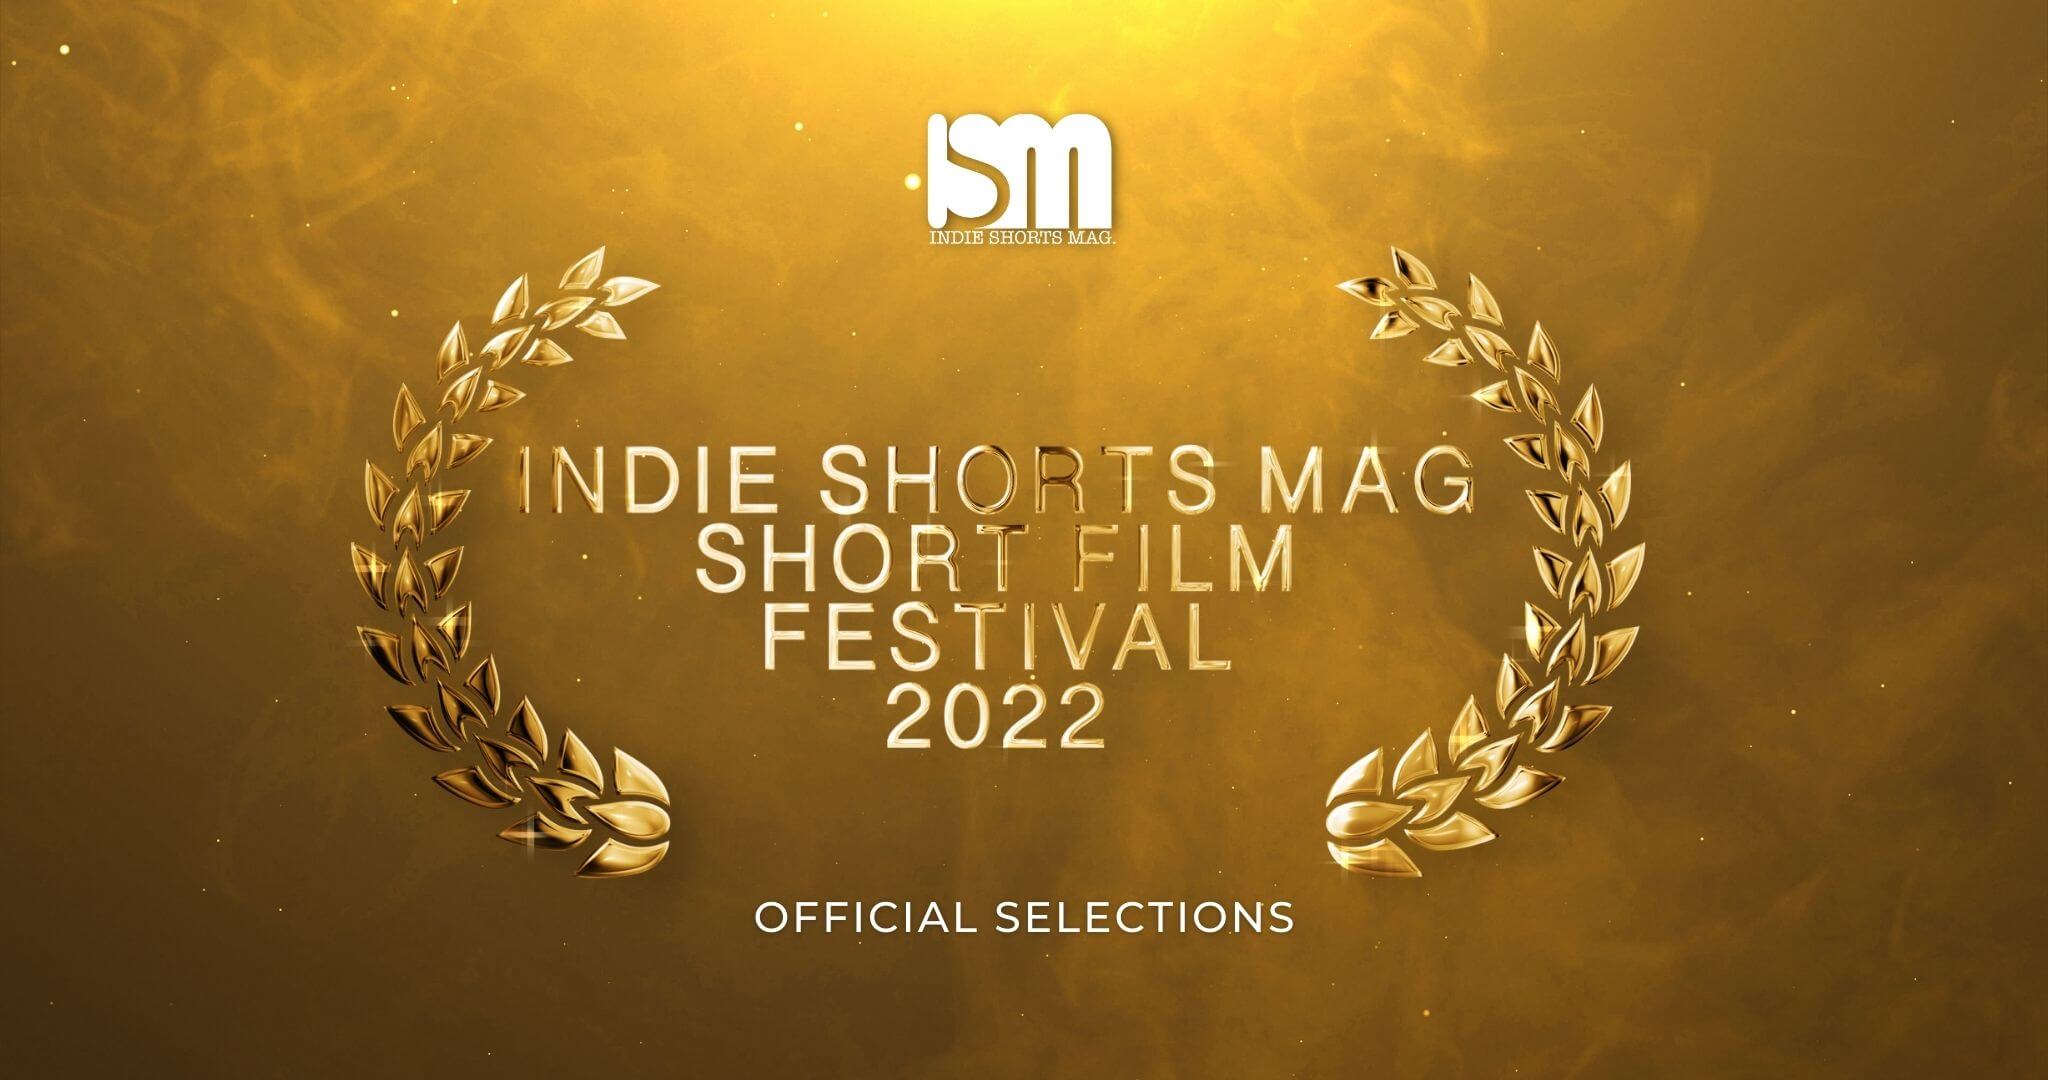 Indie Shorts Mag Short Film Festival 2022 - Announcement Post